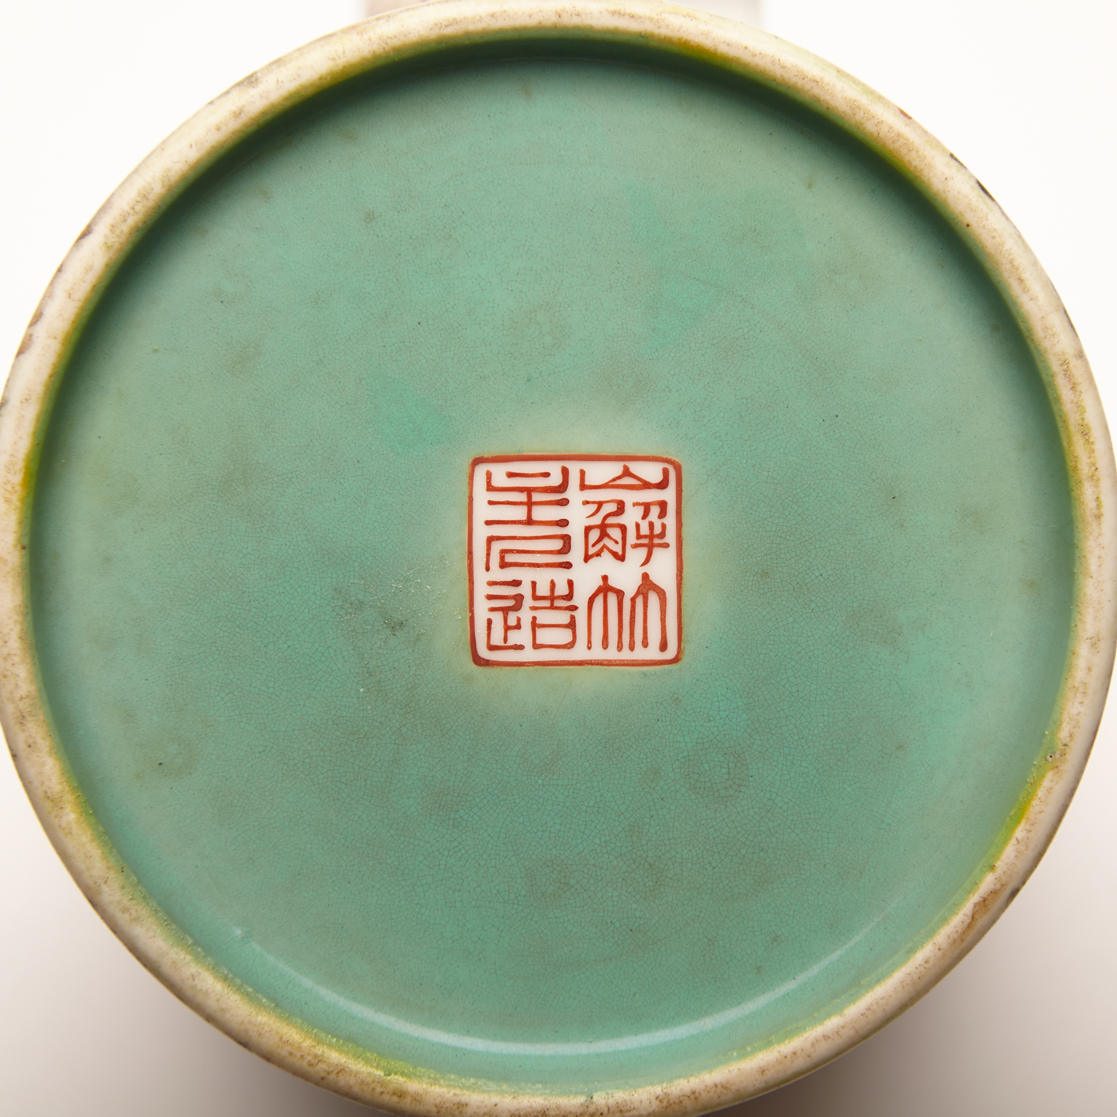 A Rare Imitation Puddingstone Teapot, Xiezhu Zhuren Zao Hall Marks in Iron Red, Daoguang Period (1821-1850)